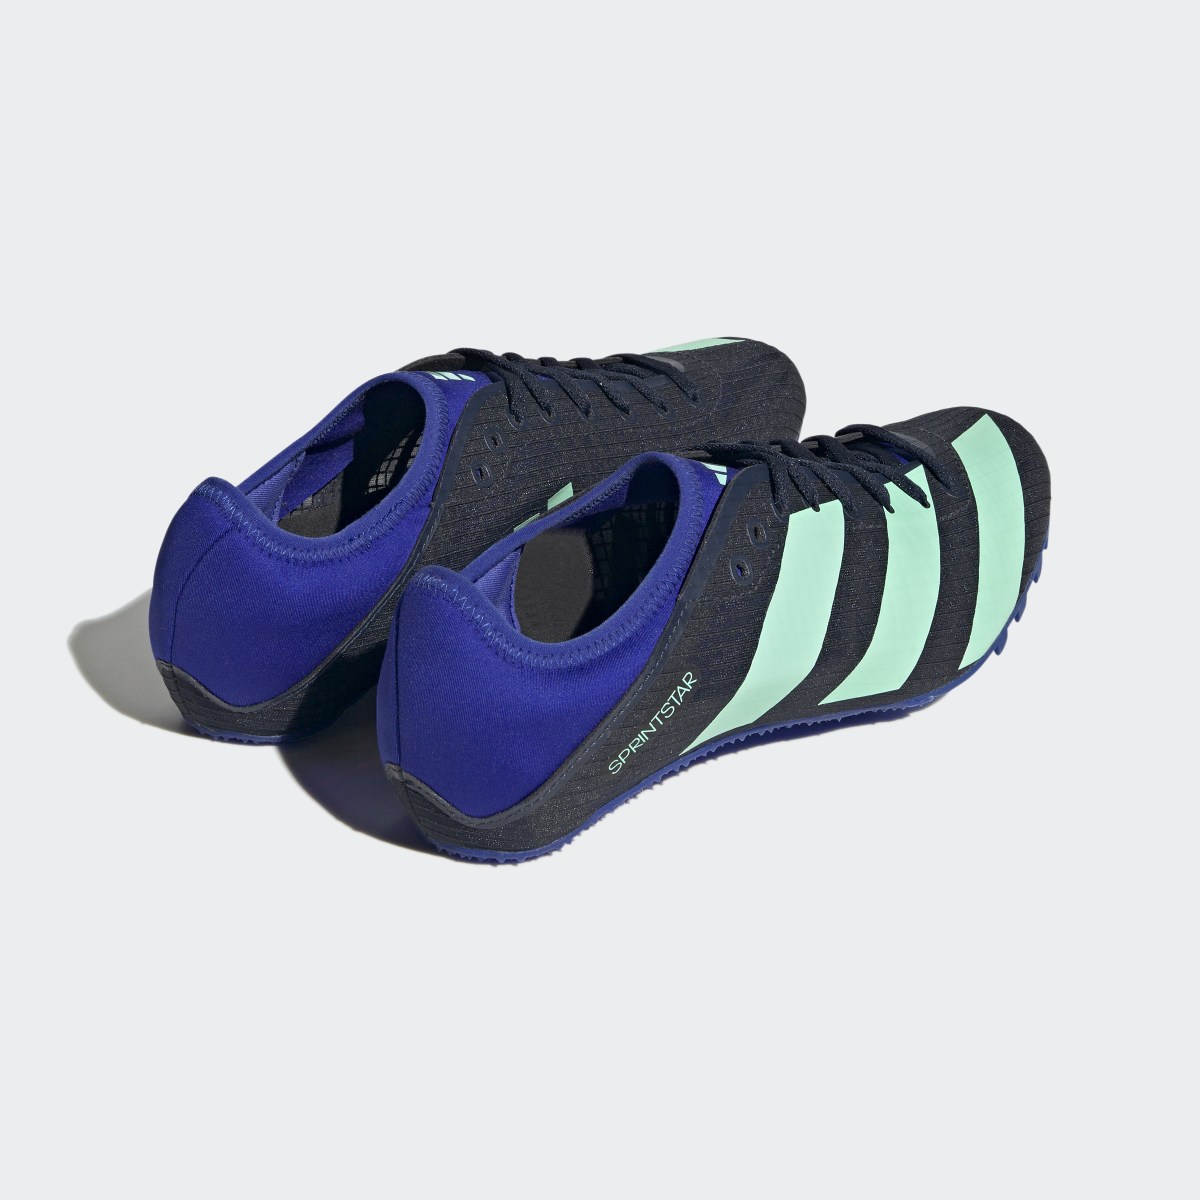 Adidas Sprintstar Shoes. 6